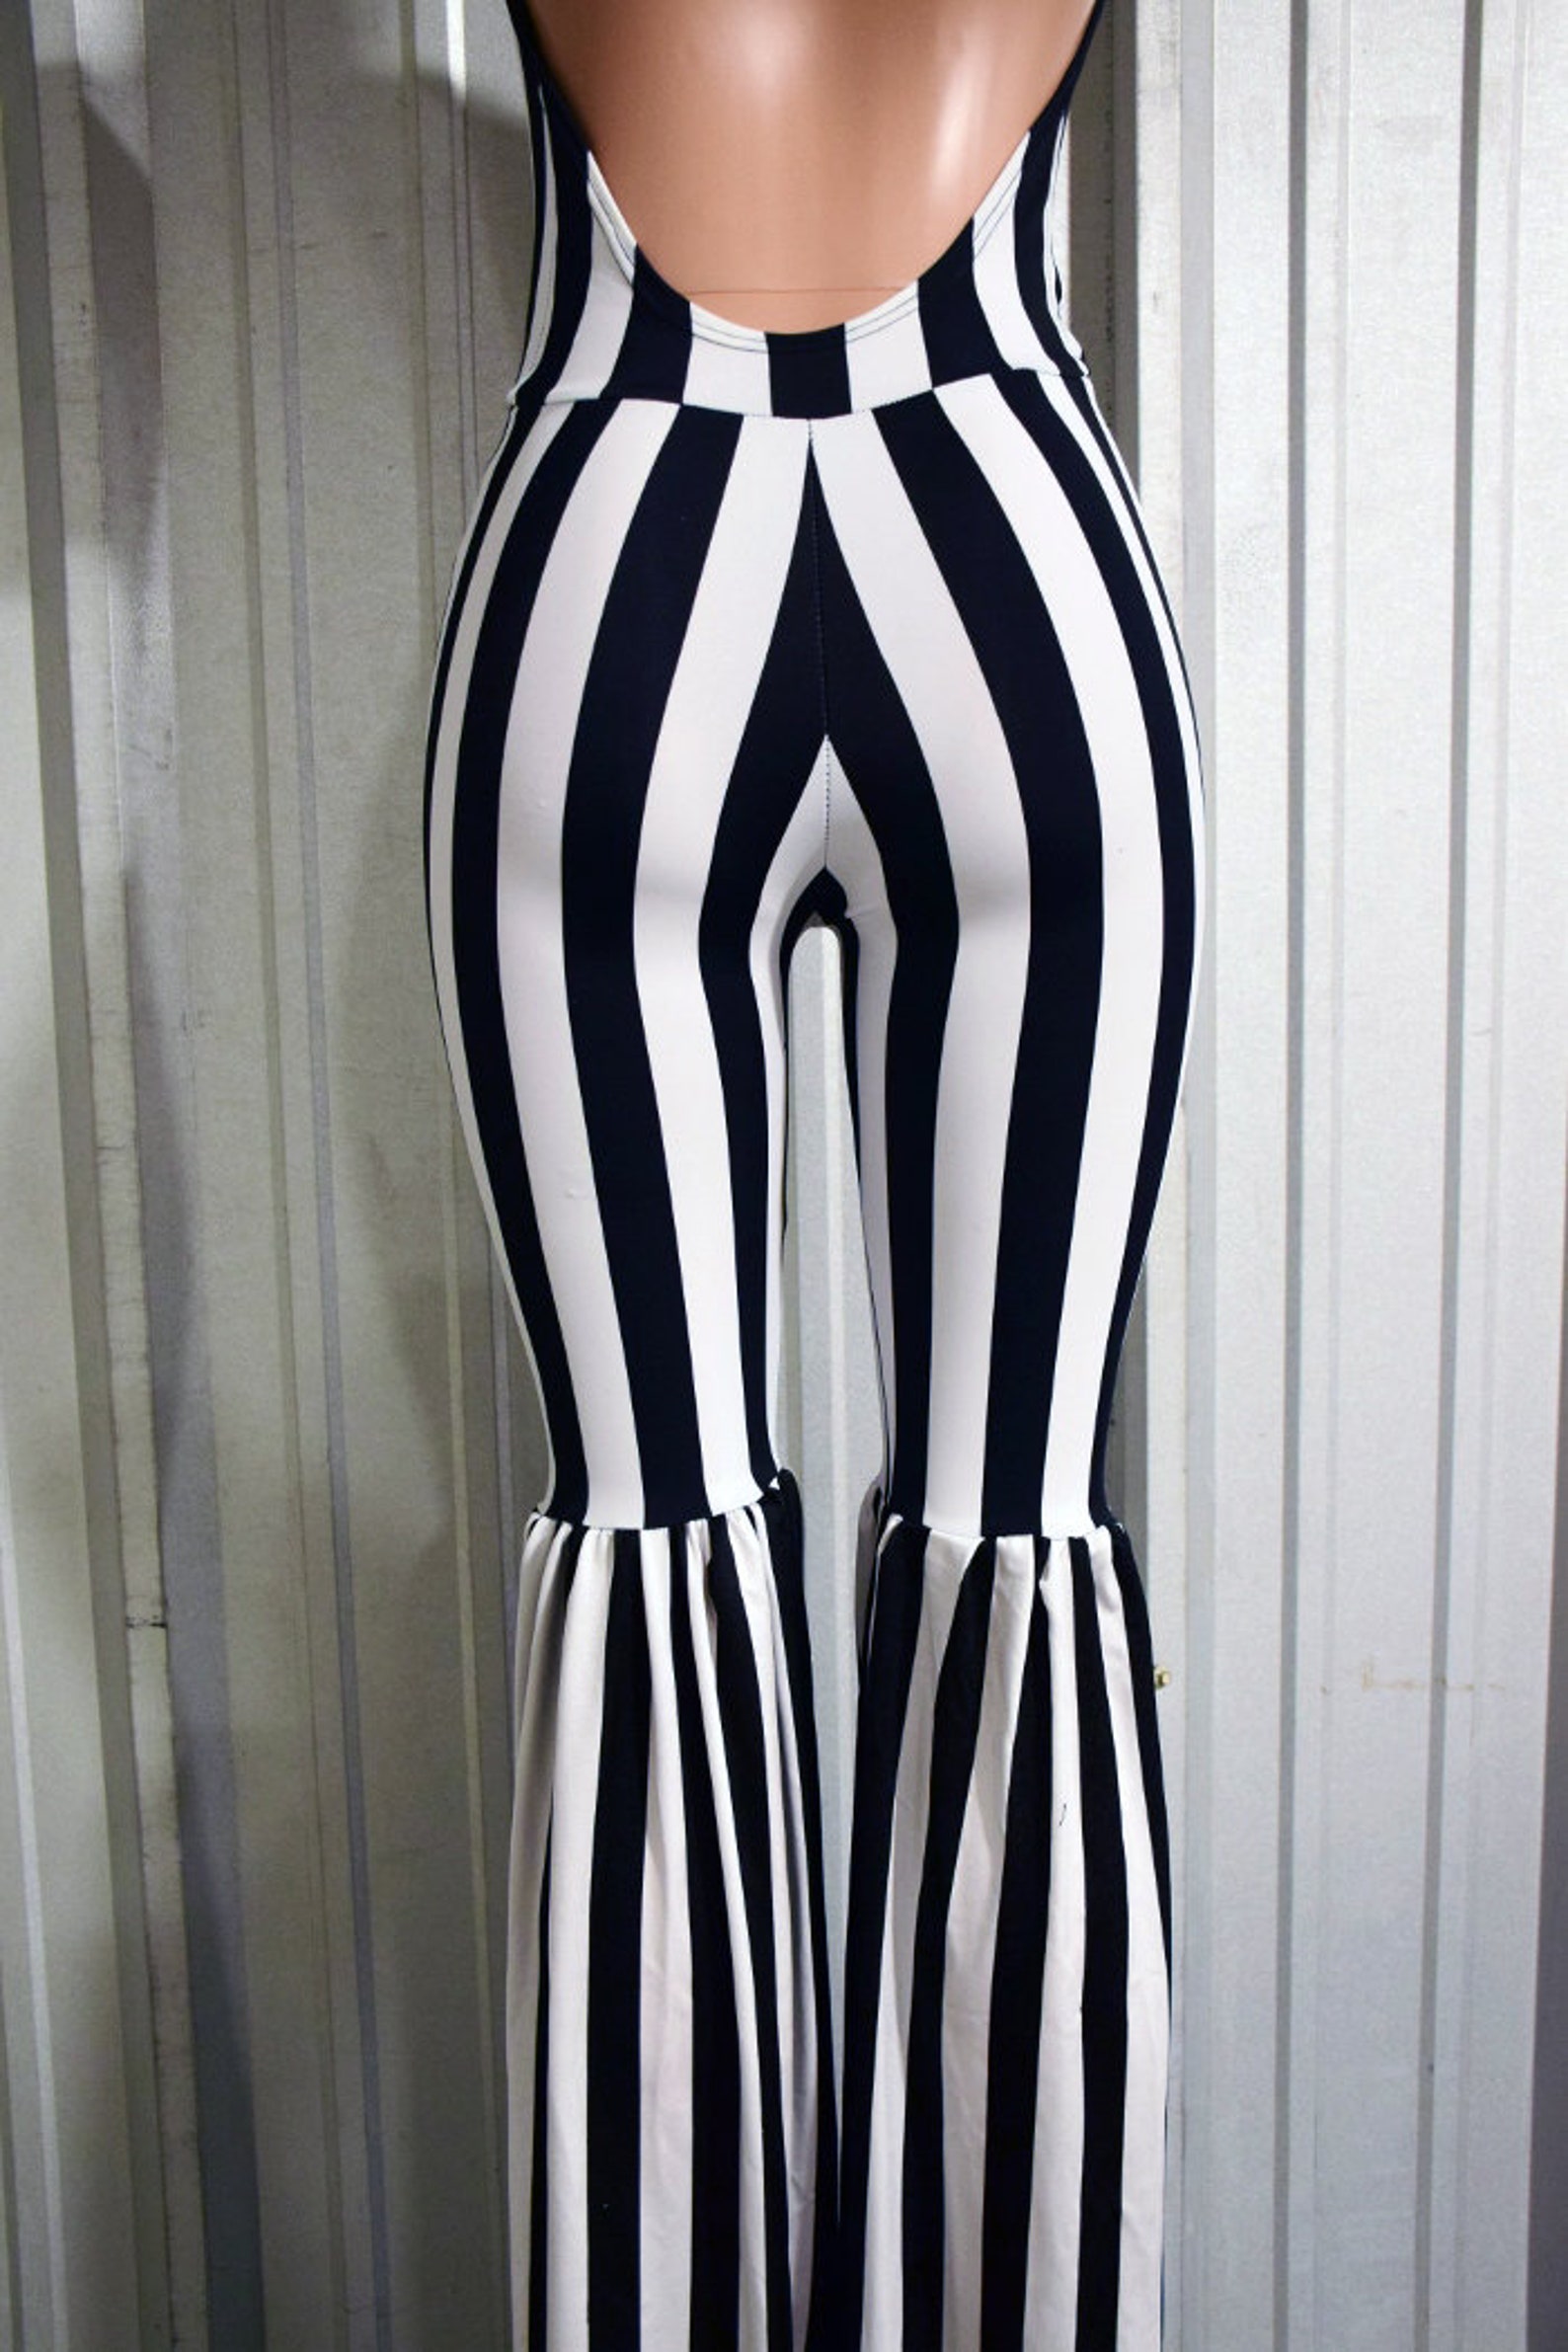 Black and White Vertical Stripe Stilt Walking Costume With - Etsy